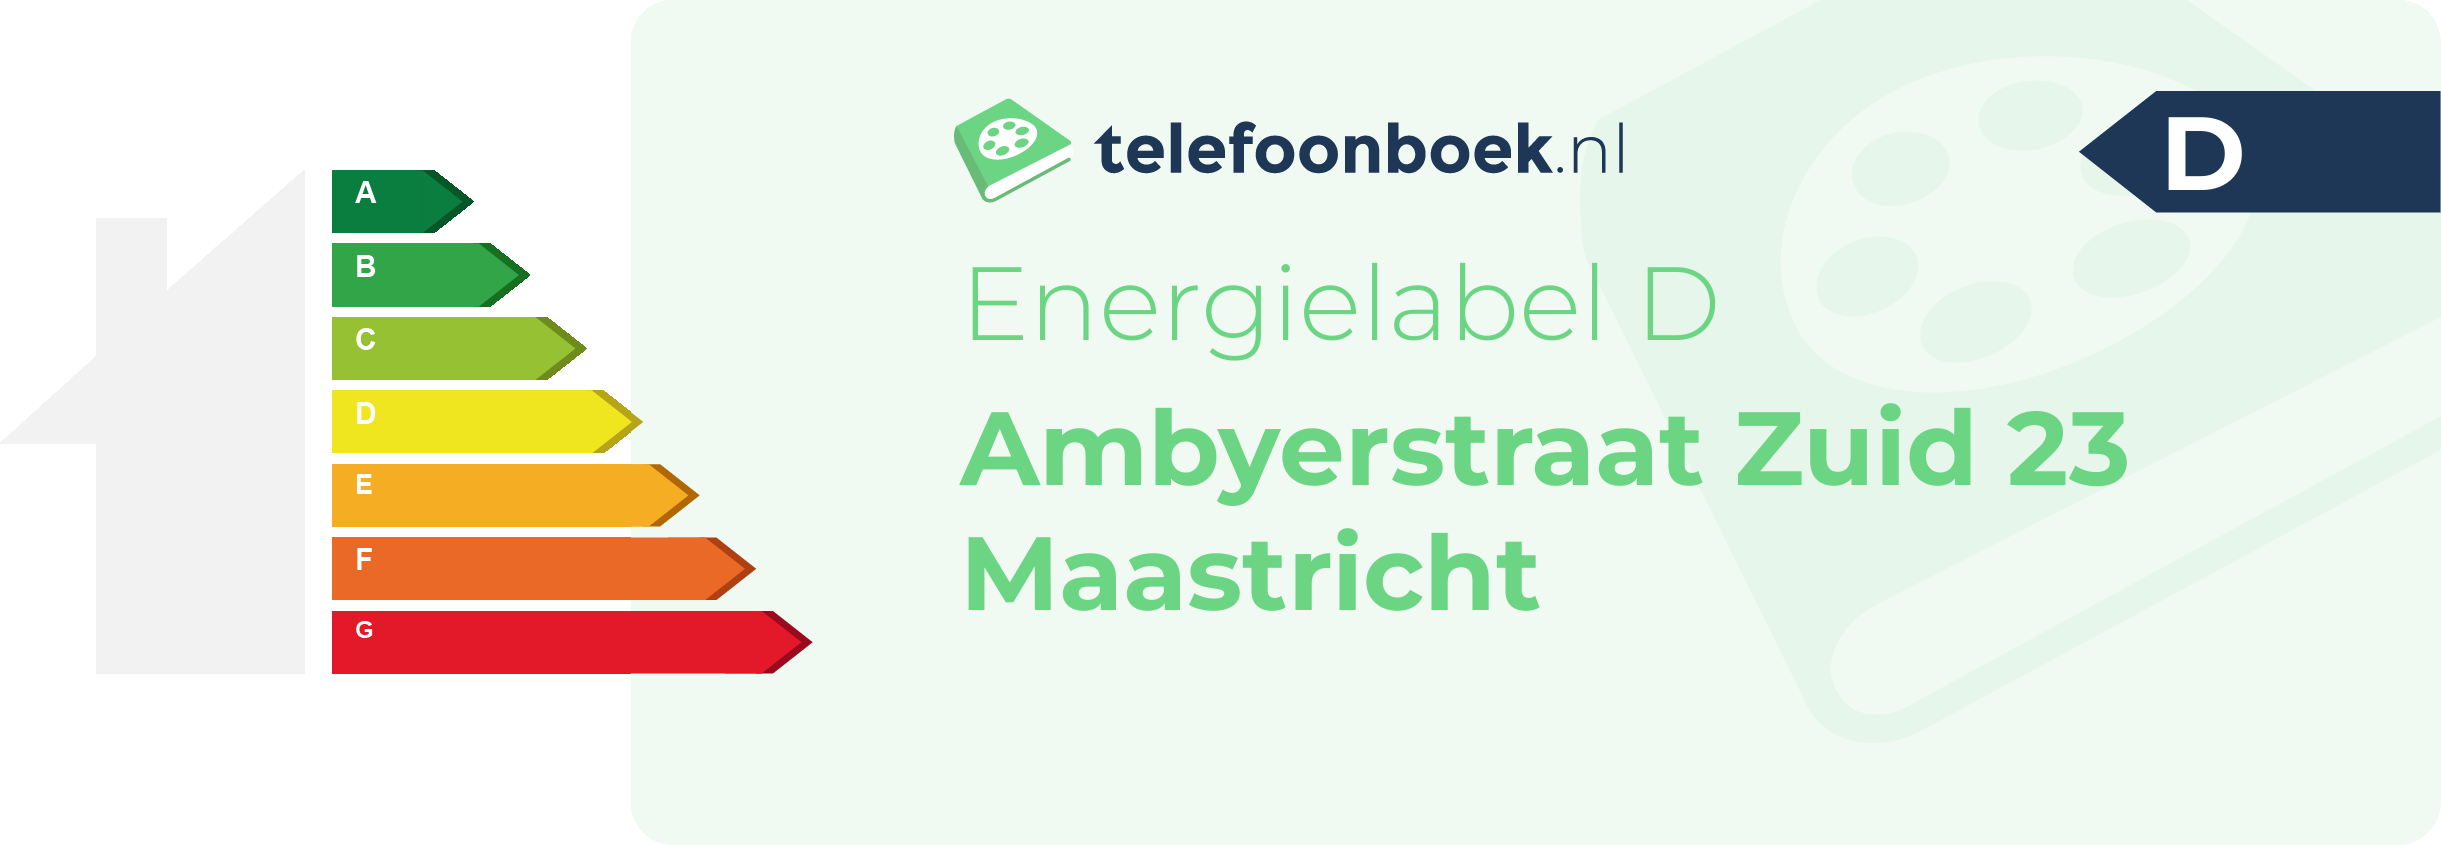 Energielabel Ambyerstraat Zuid 23 Maastricht